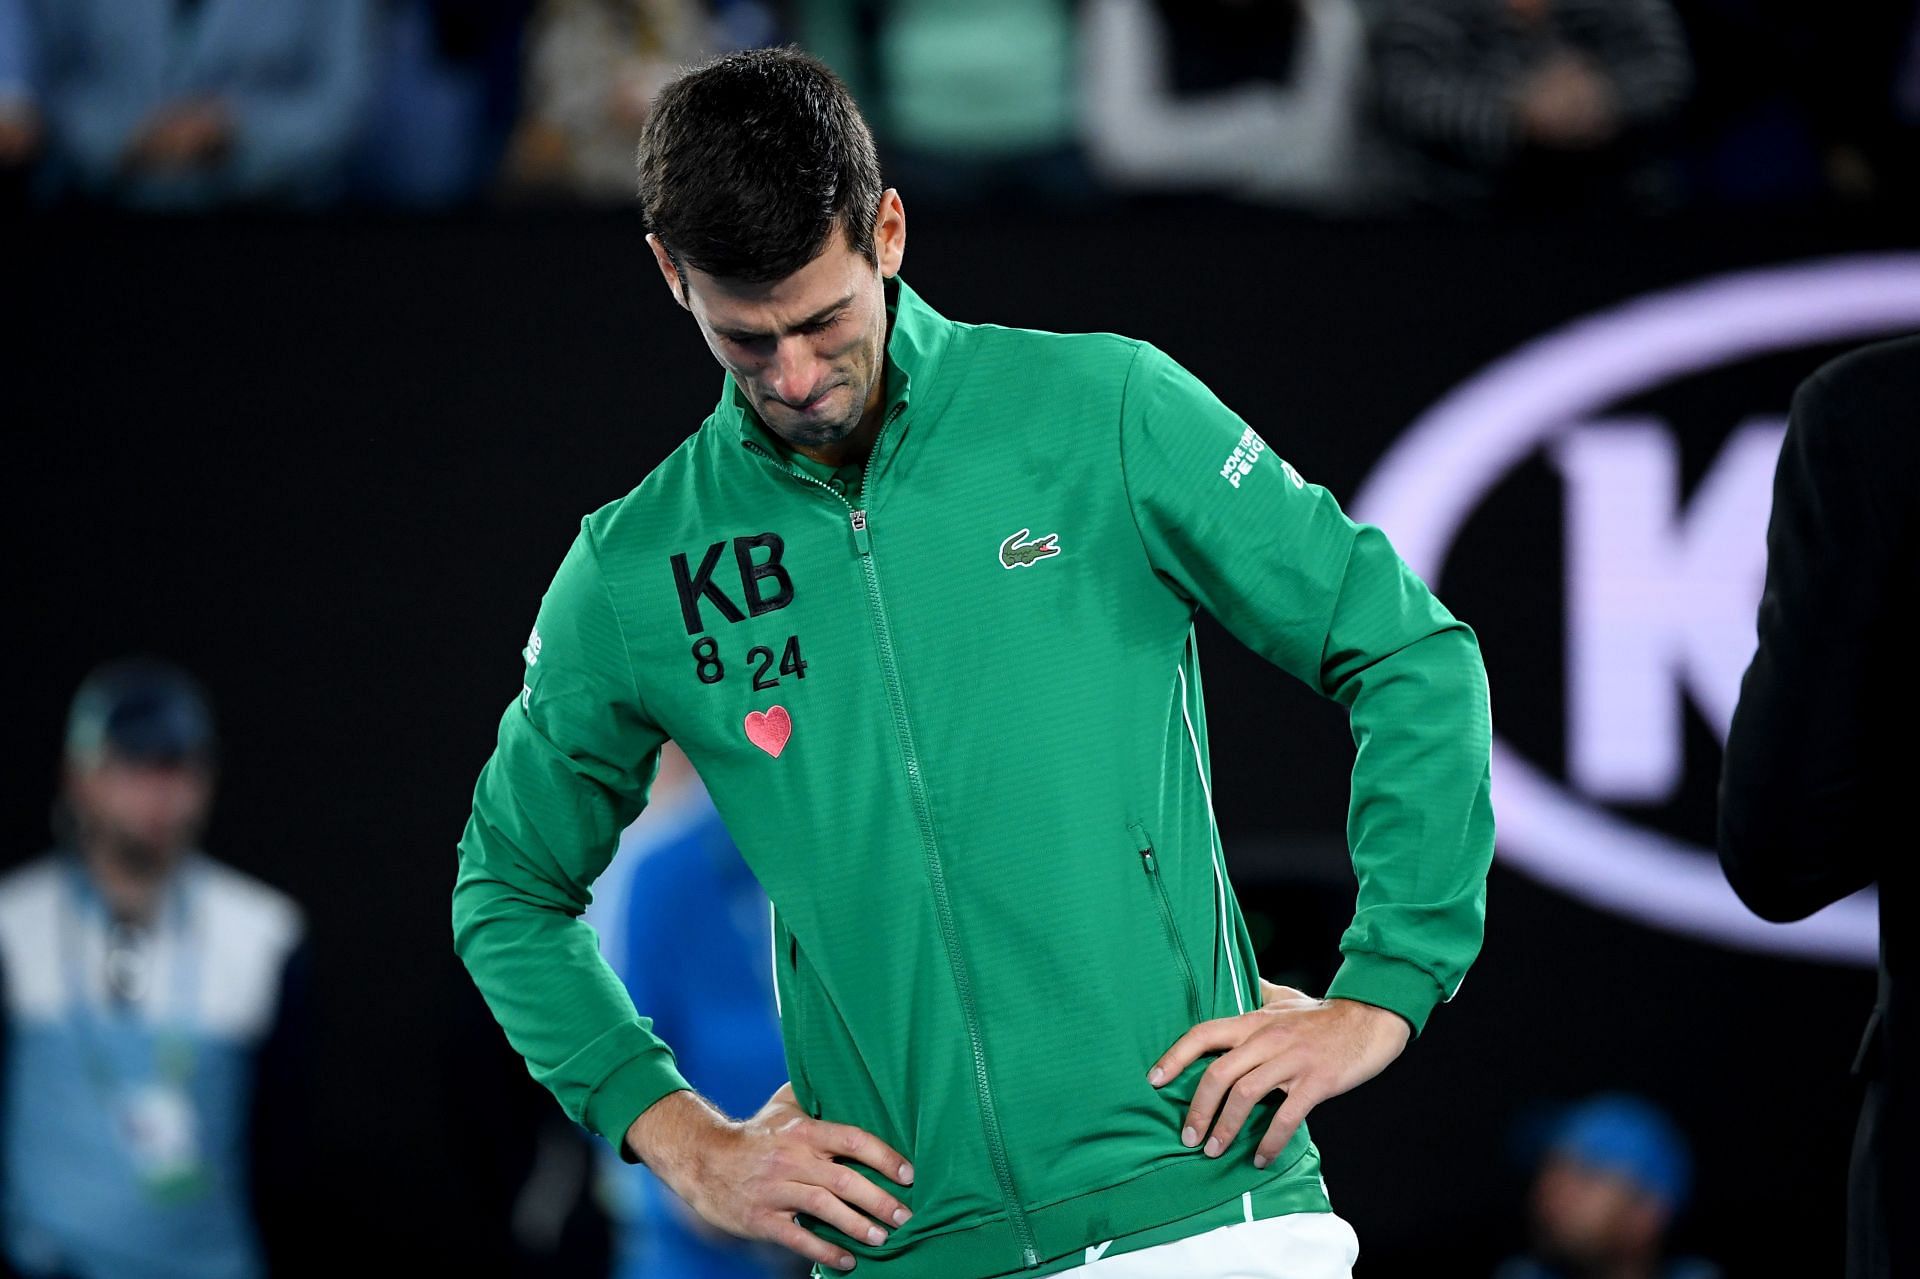 Roger Rasheed believes Novak Djokovic is biding his time now